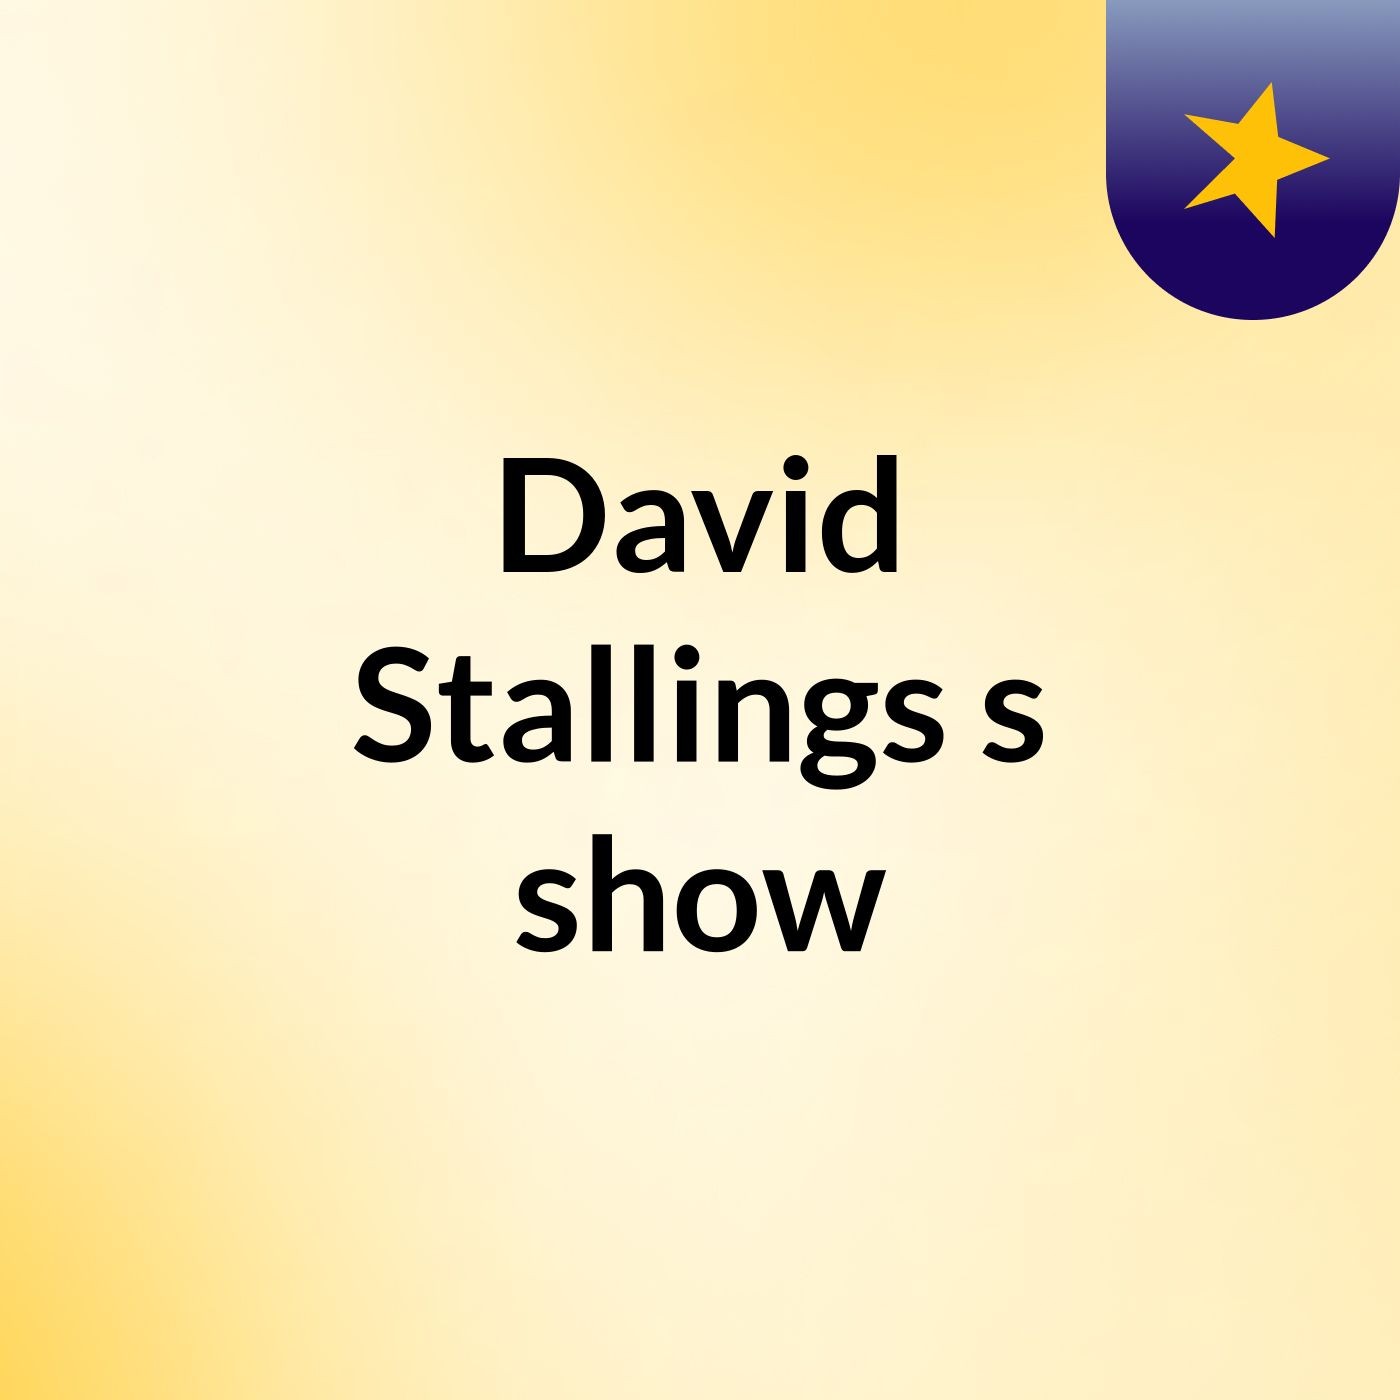 Episode 4 - David Stallings's show